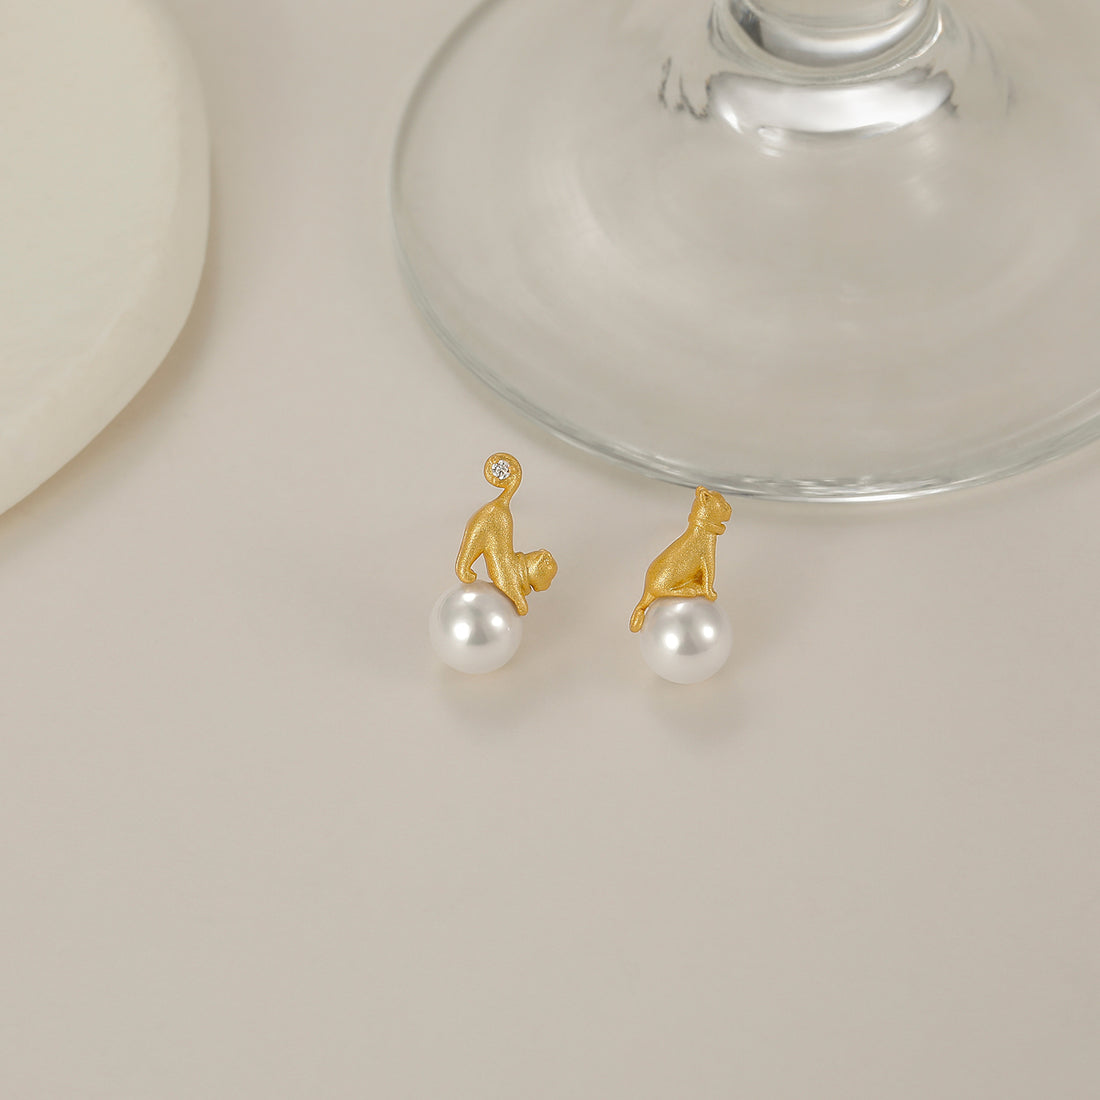 Cat Pearl Earring Studs in Sterling Silver